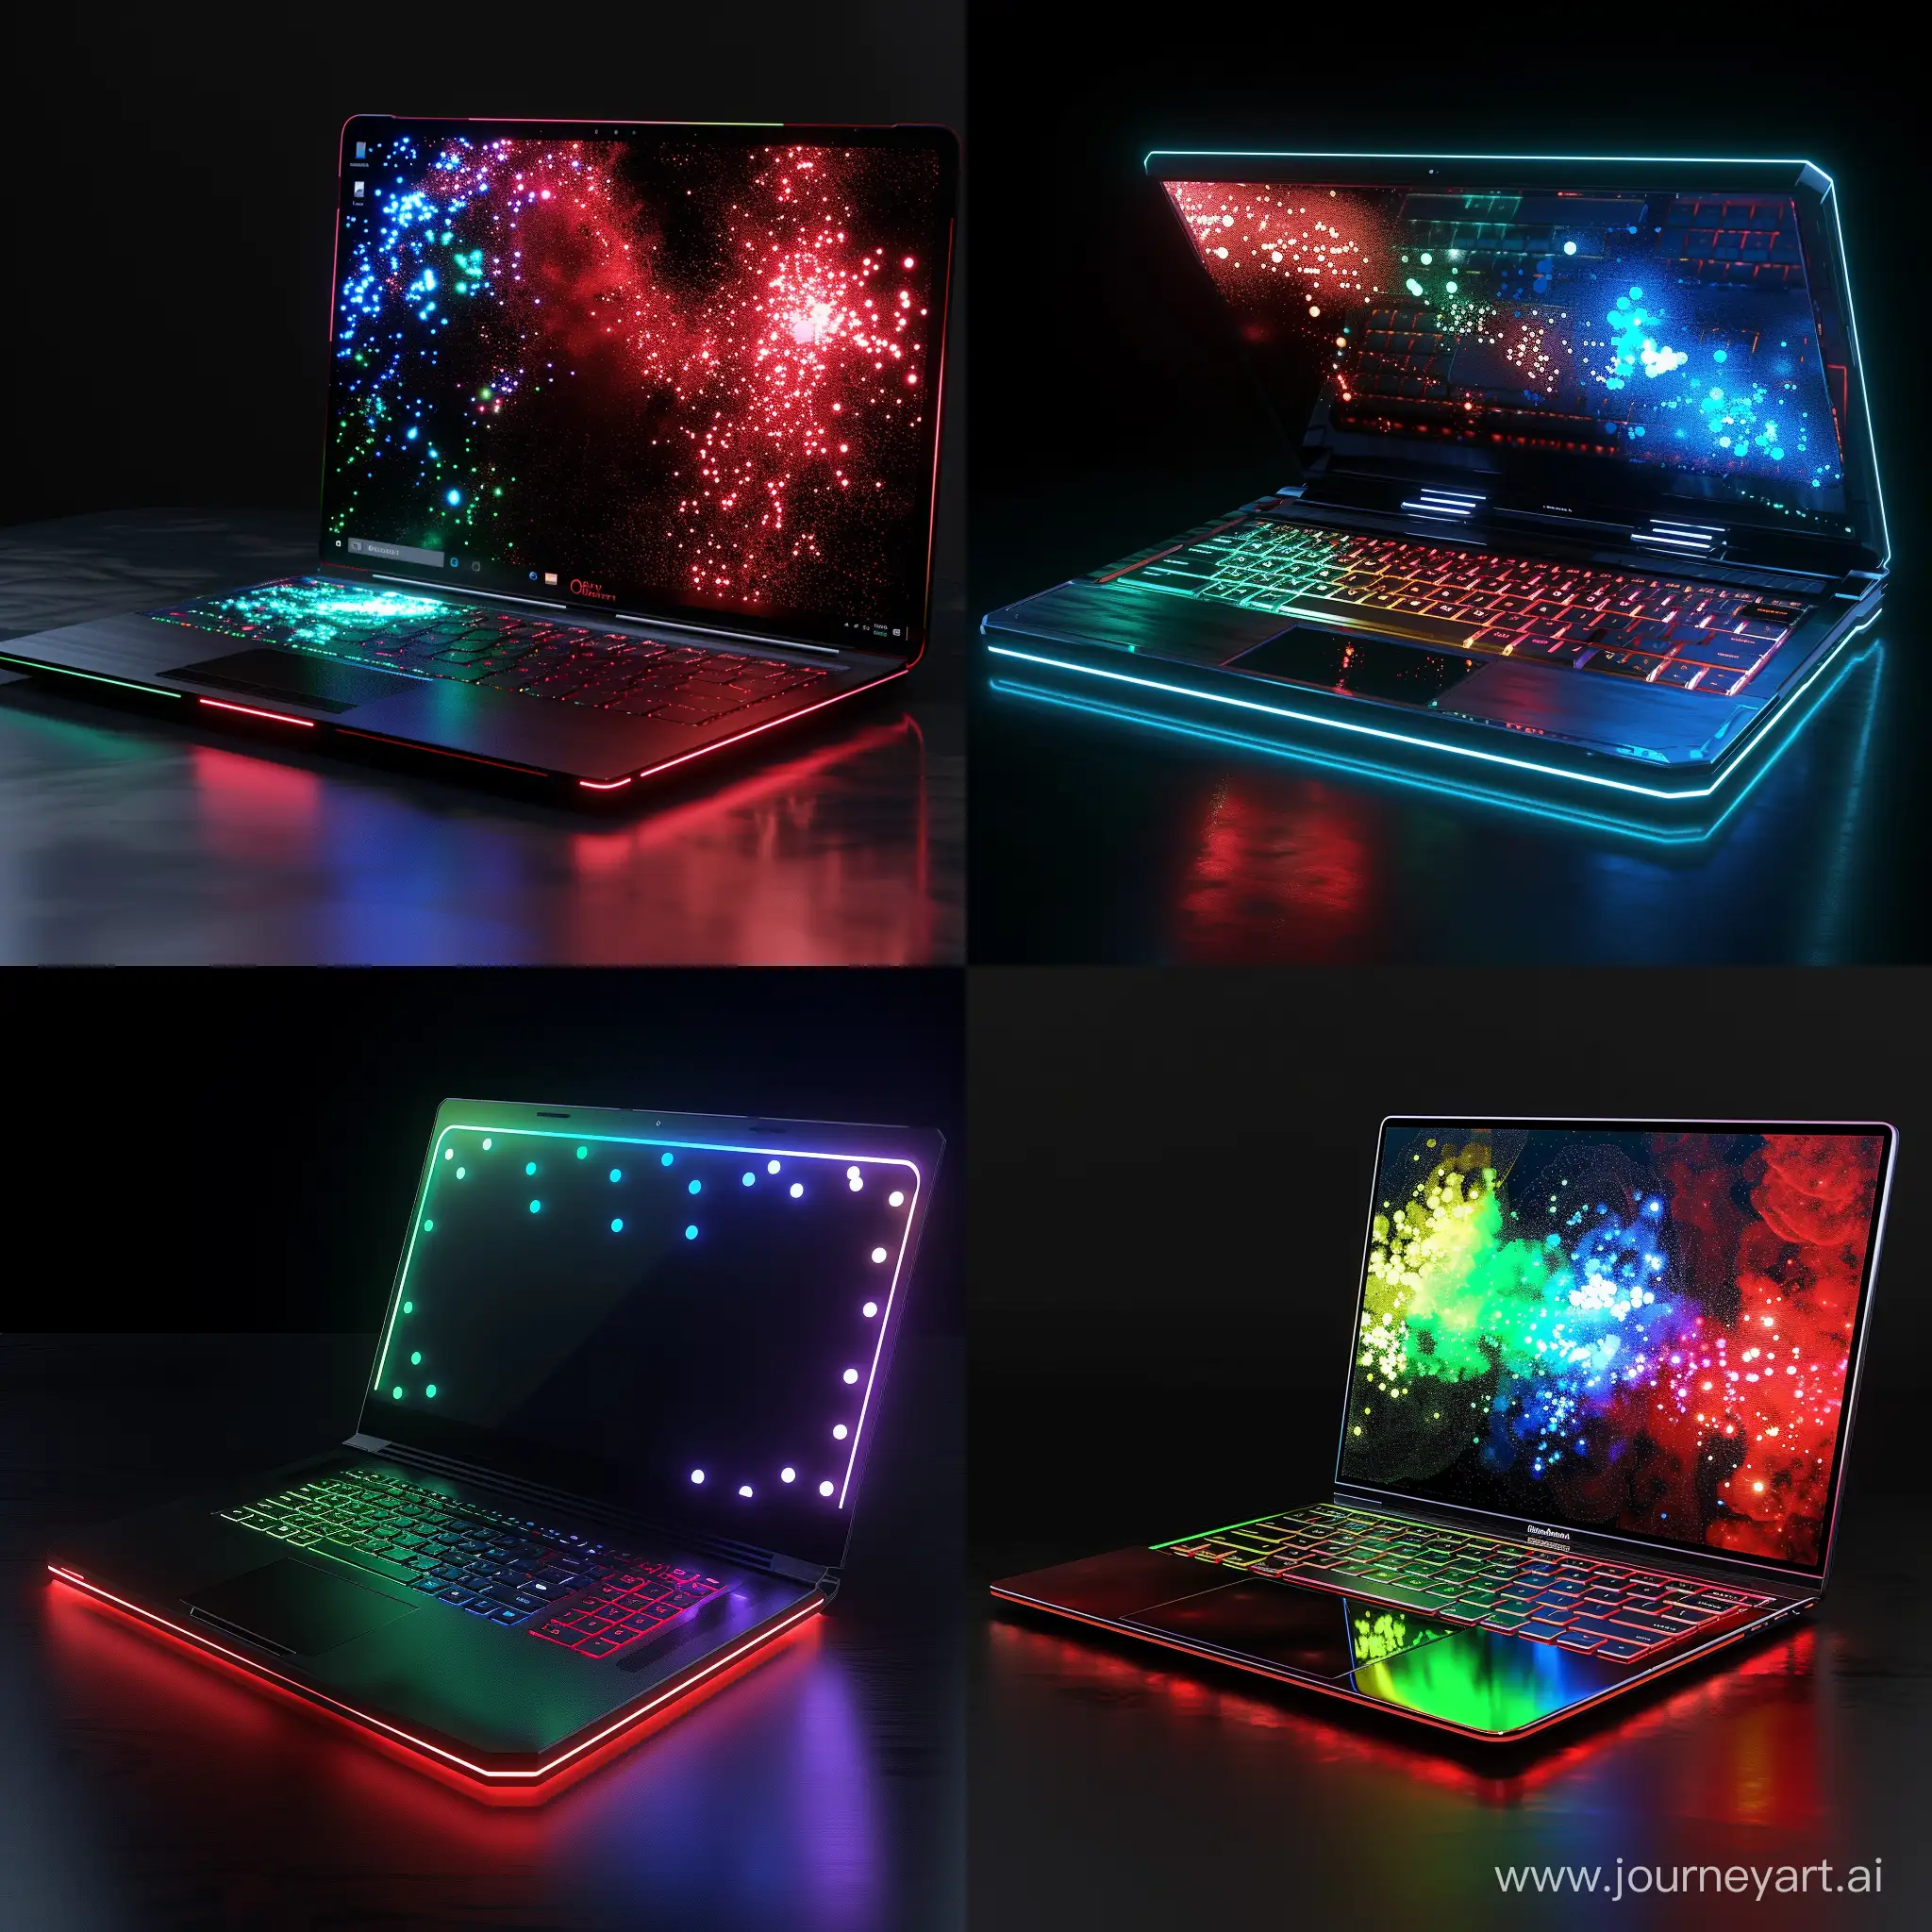 Futuristic-Laptop-with-Vibrant-LED-Display-Quantum-Dot-Technology